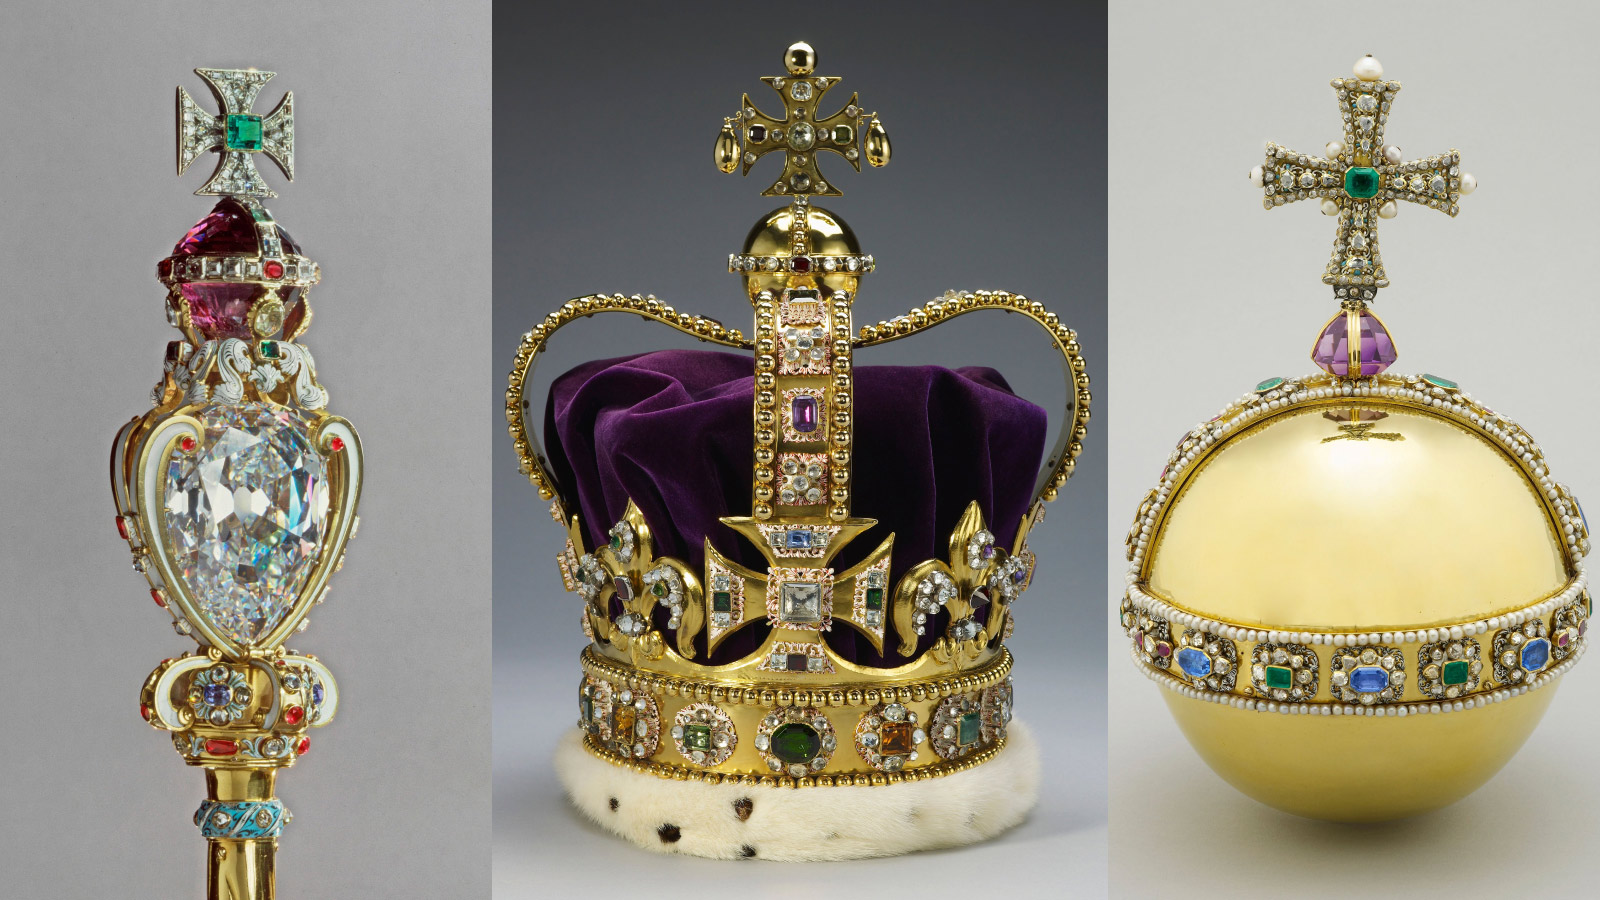 Guide to King Charles III’s coronation CNN Style